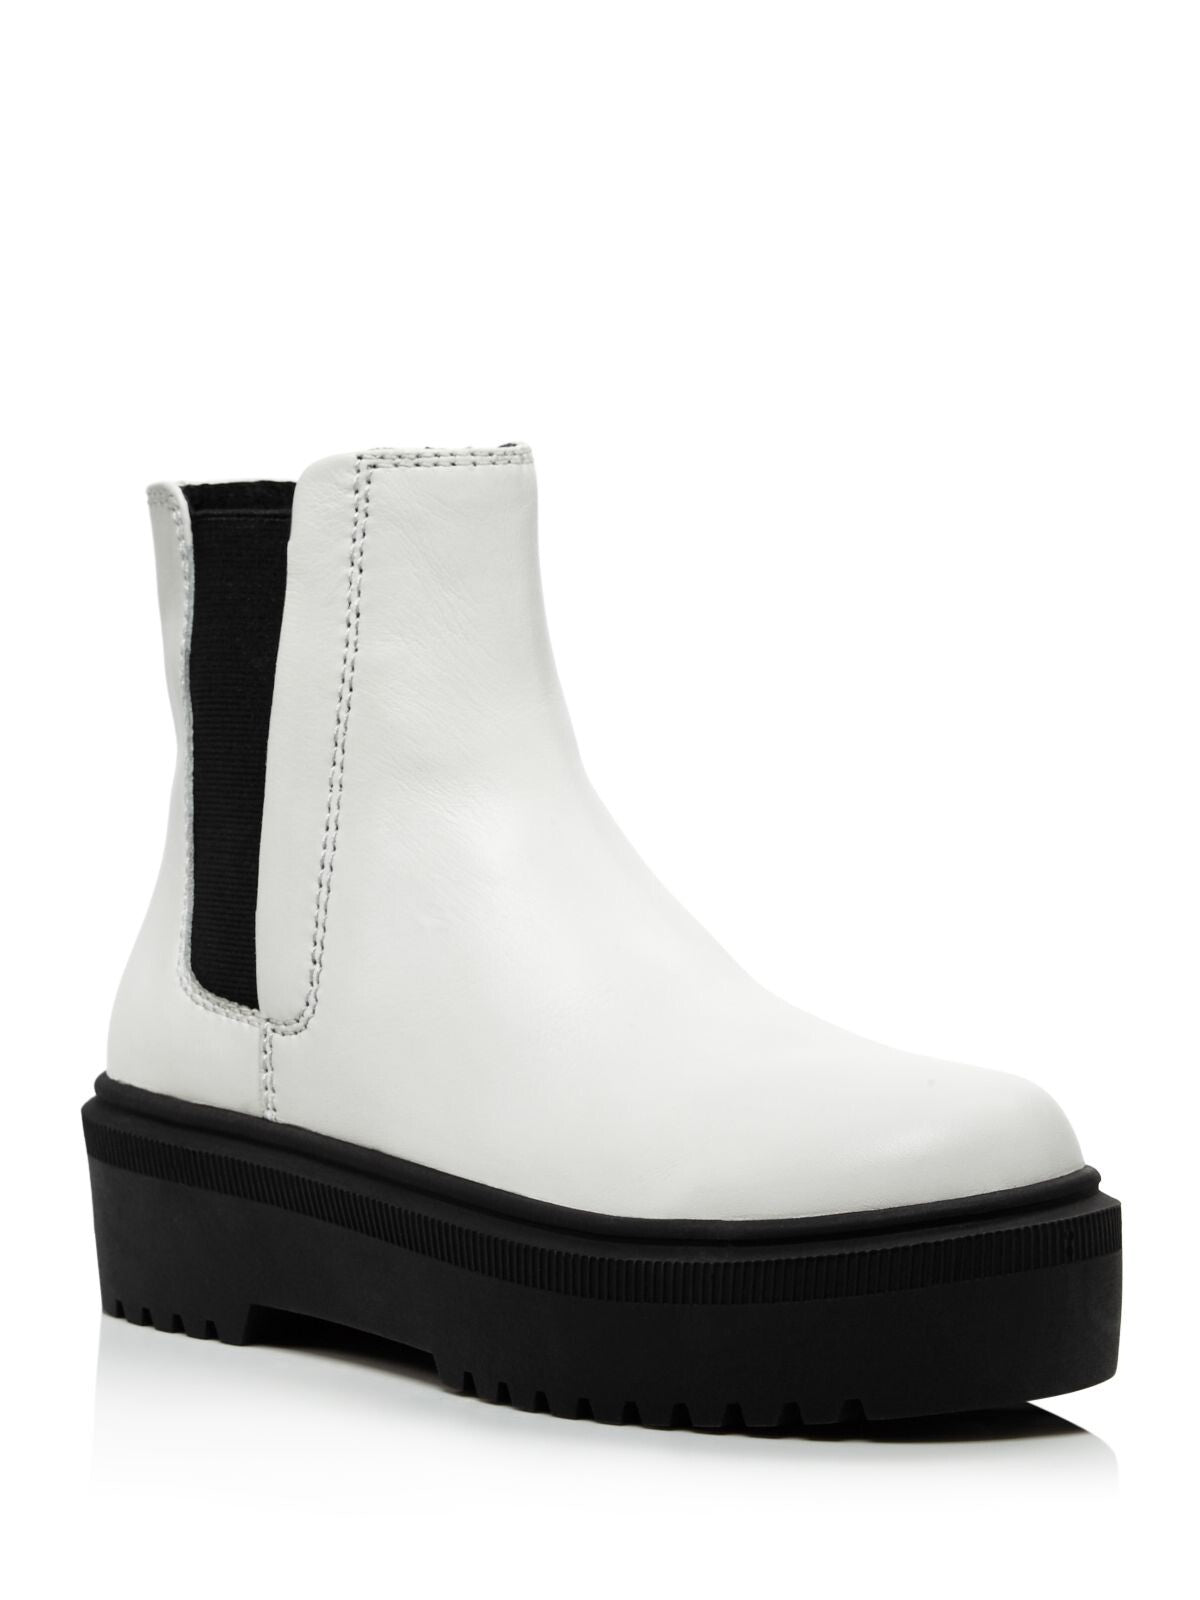 AQUA Womens White Padded Lug Sole Goring Loren Round Toe Platform Leather Boots Shoes 6 M